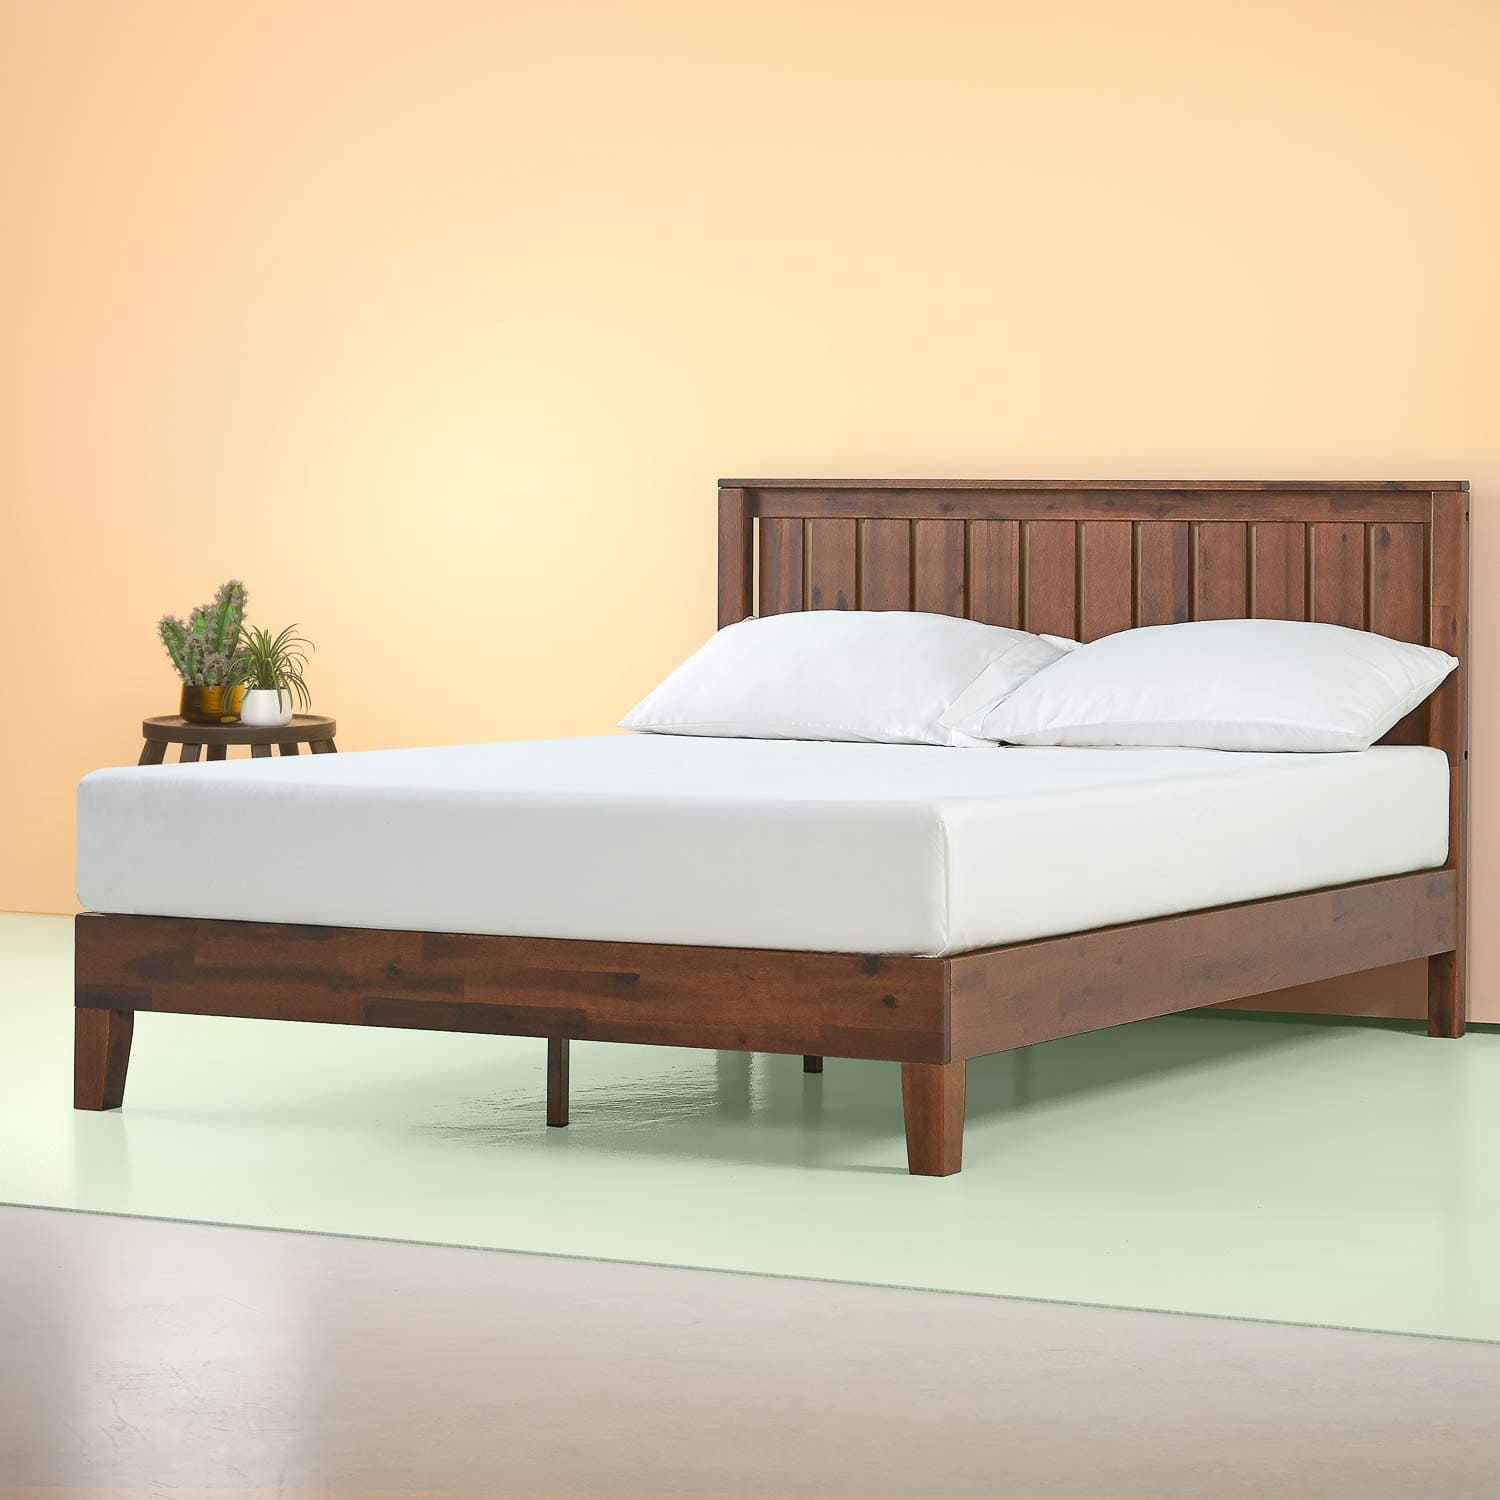 zinus 12 inch wood platform bed with headboard